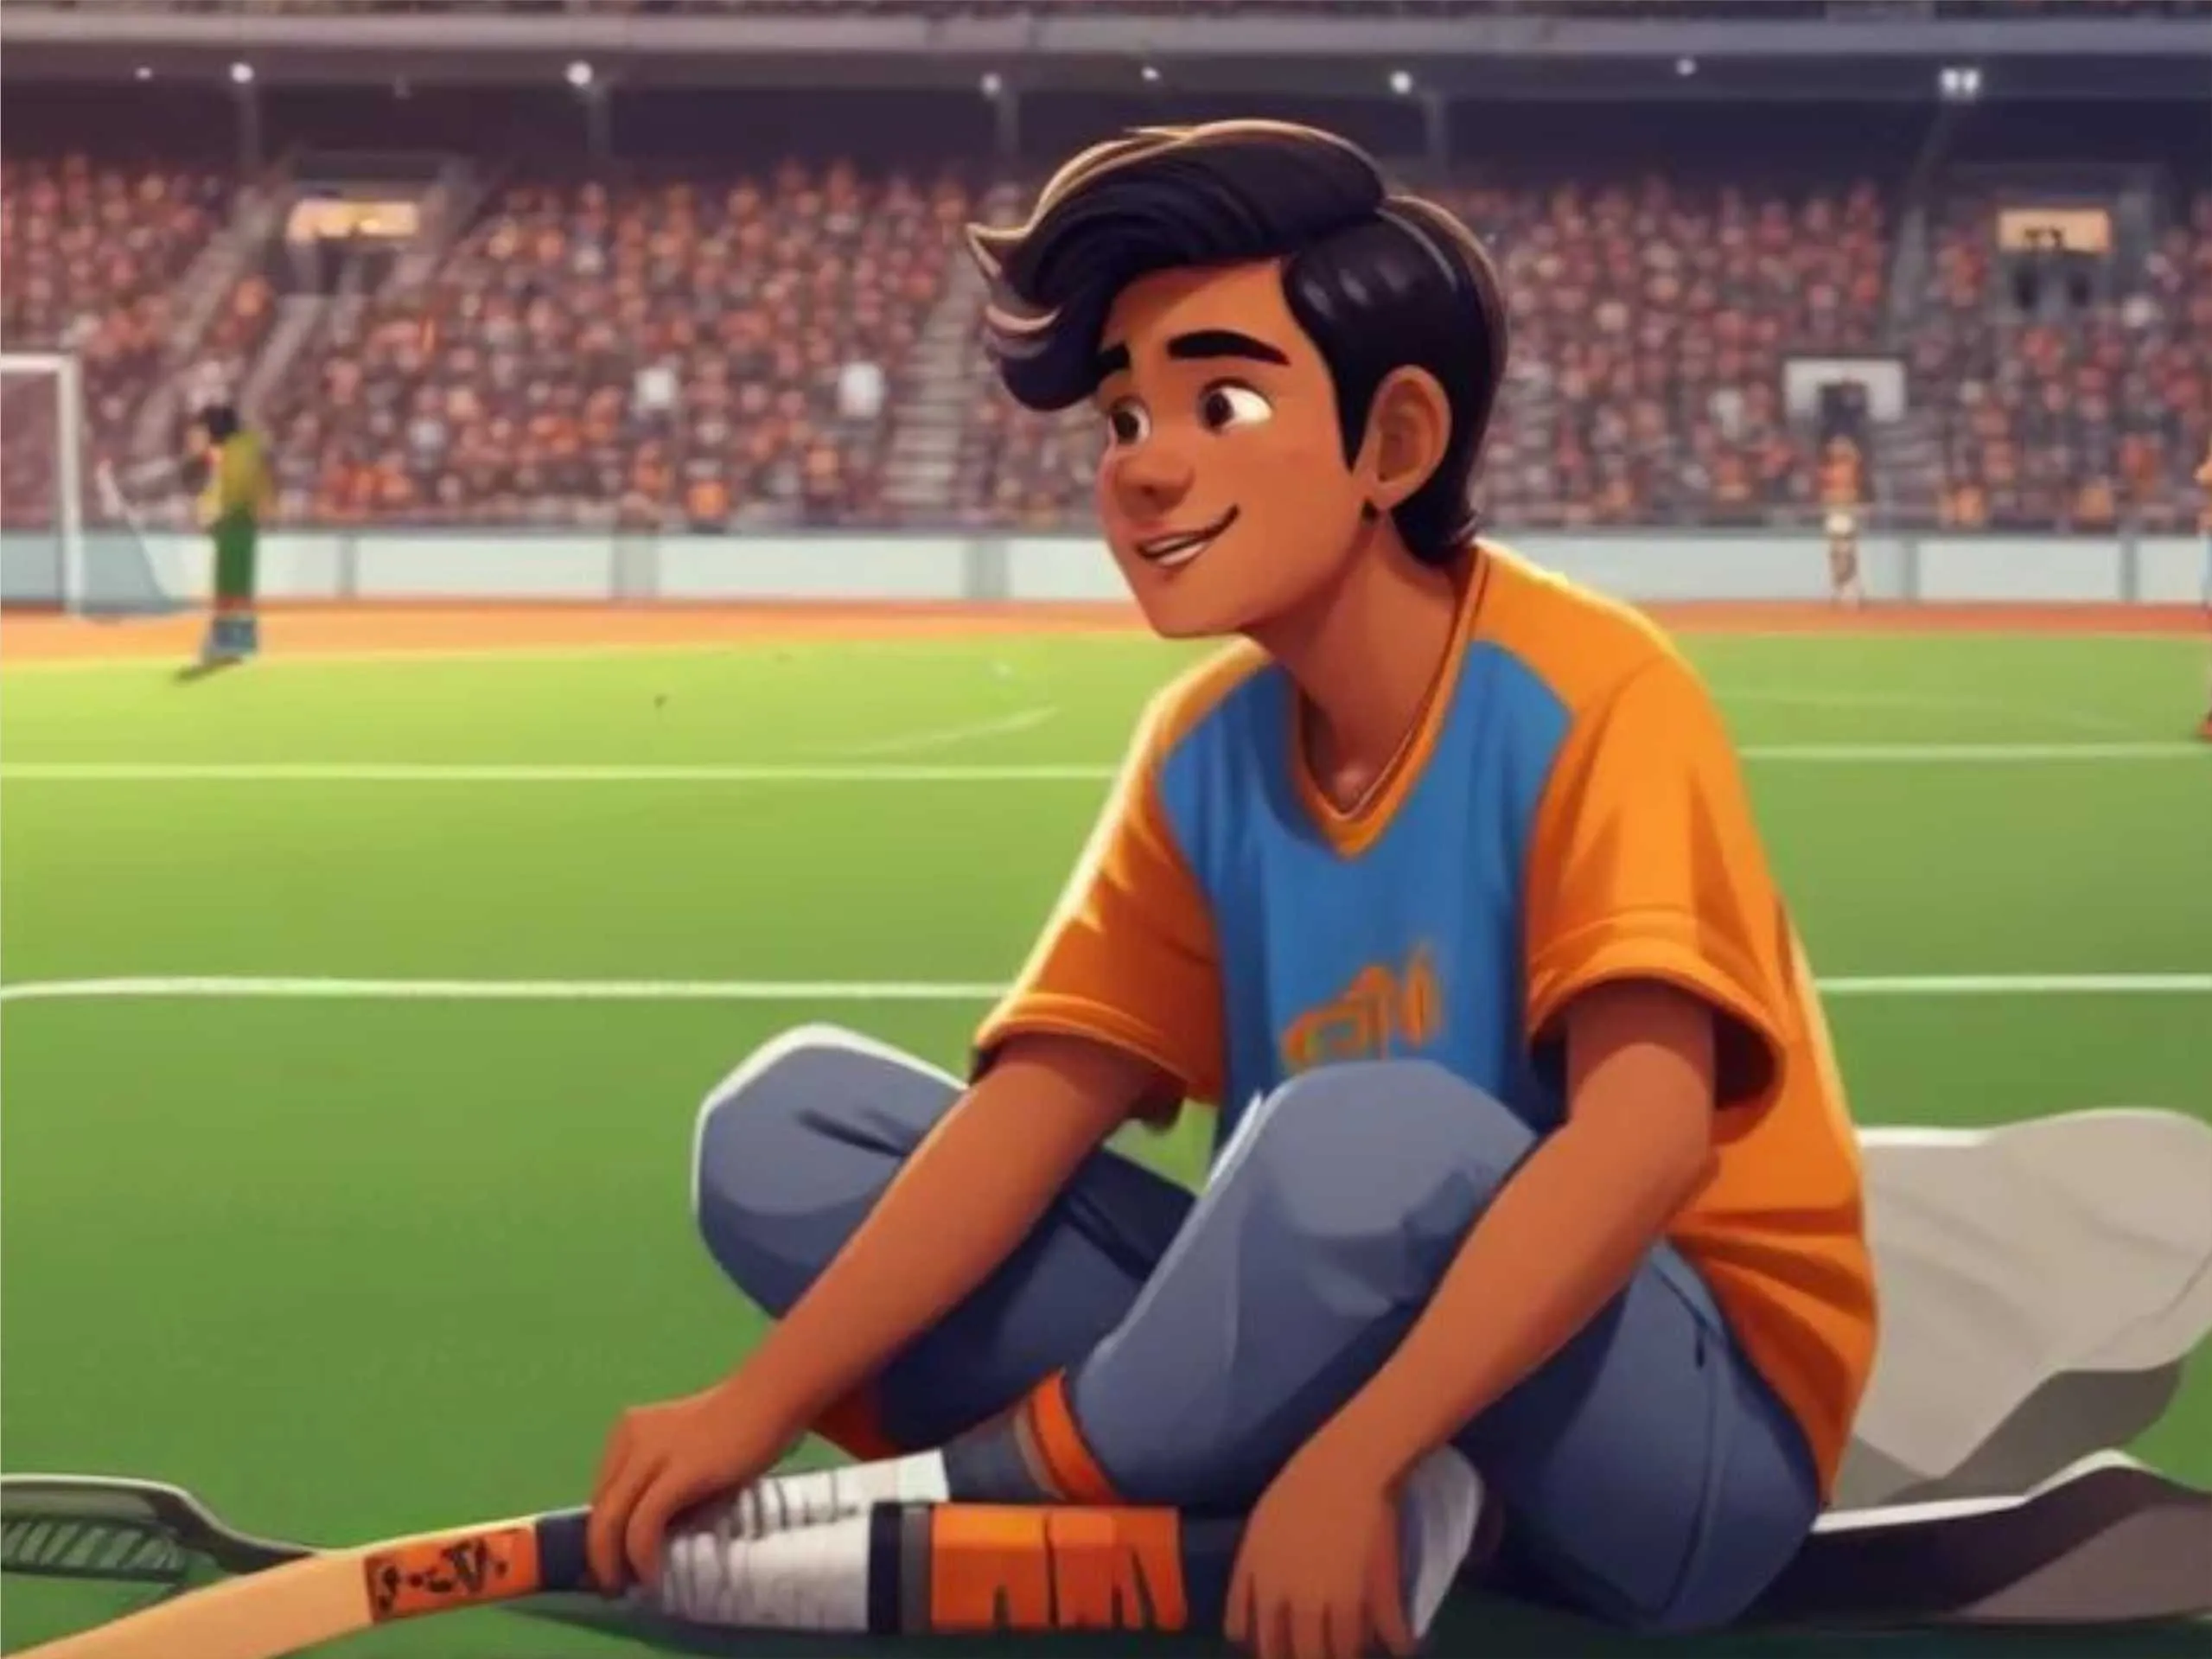 Boy in hockey ground cartoon image